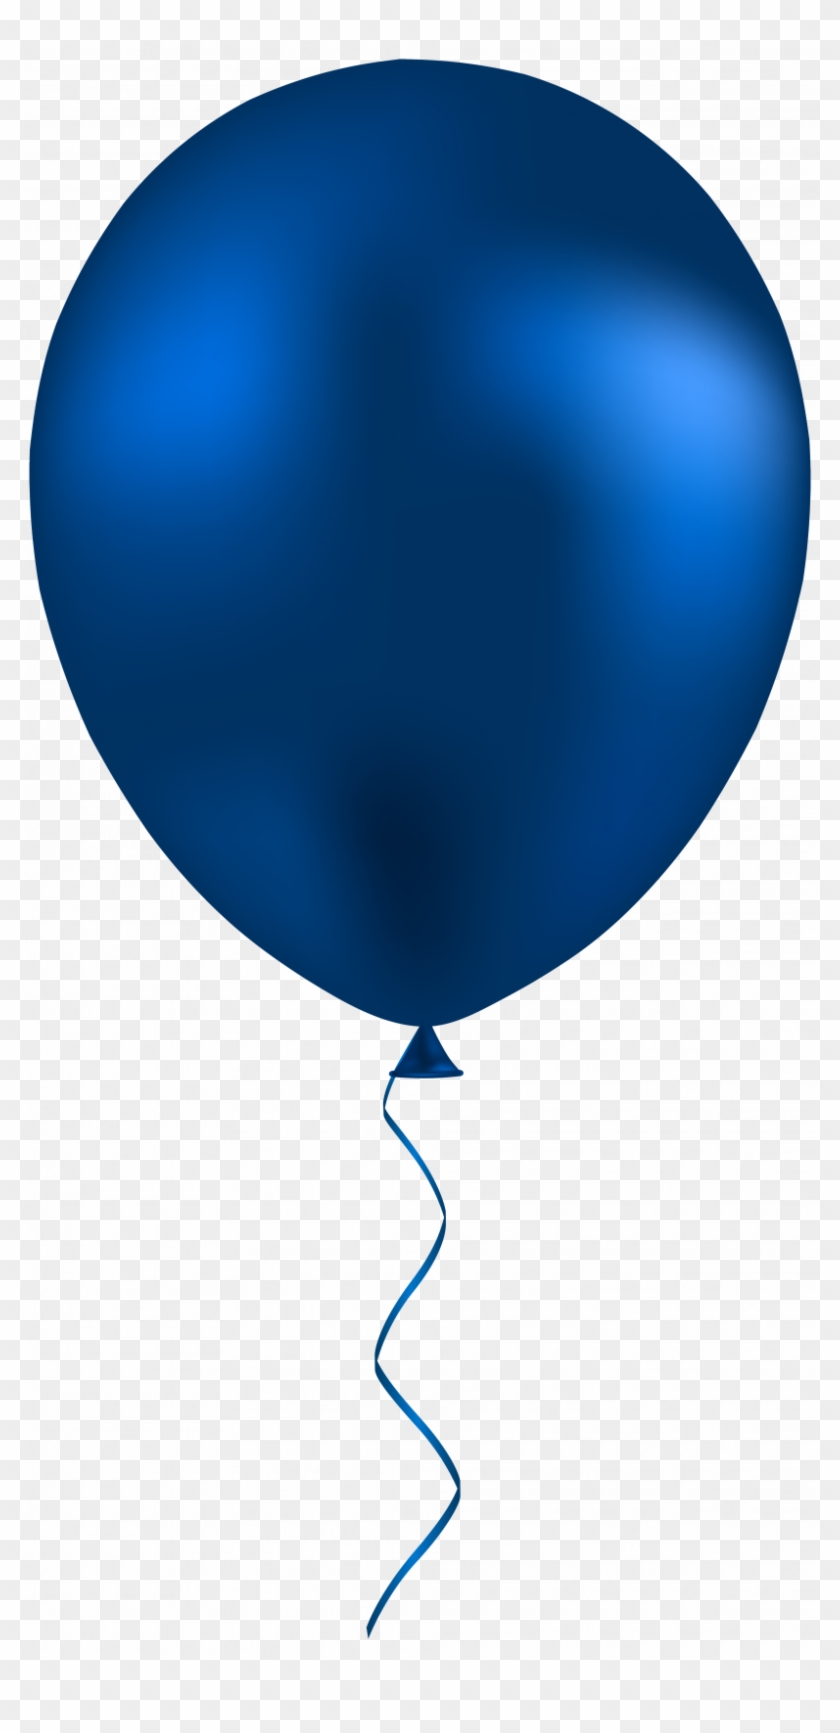 Balloon Free Jokingart Com Ⓒ - Balloon Free Jokingart Com Ⓒ #1540802